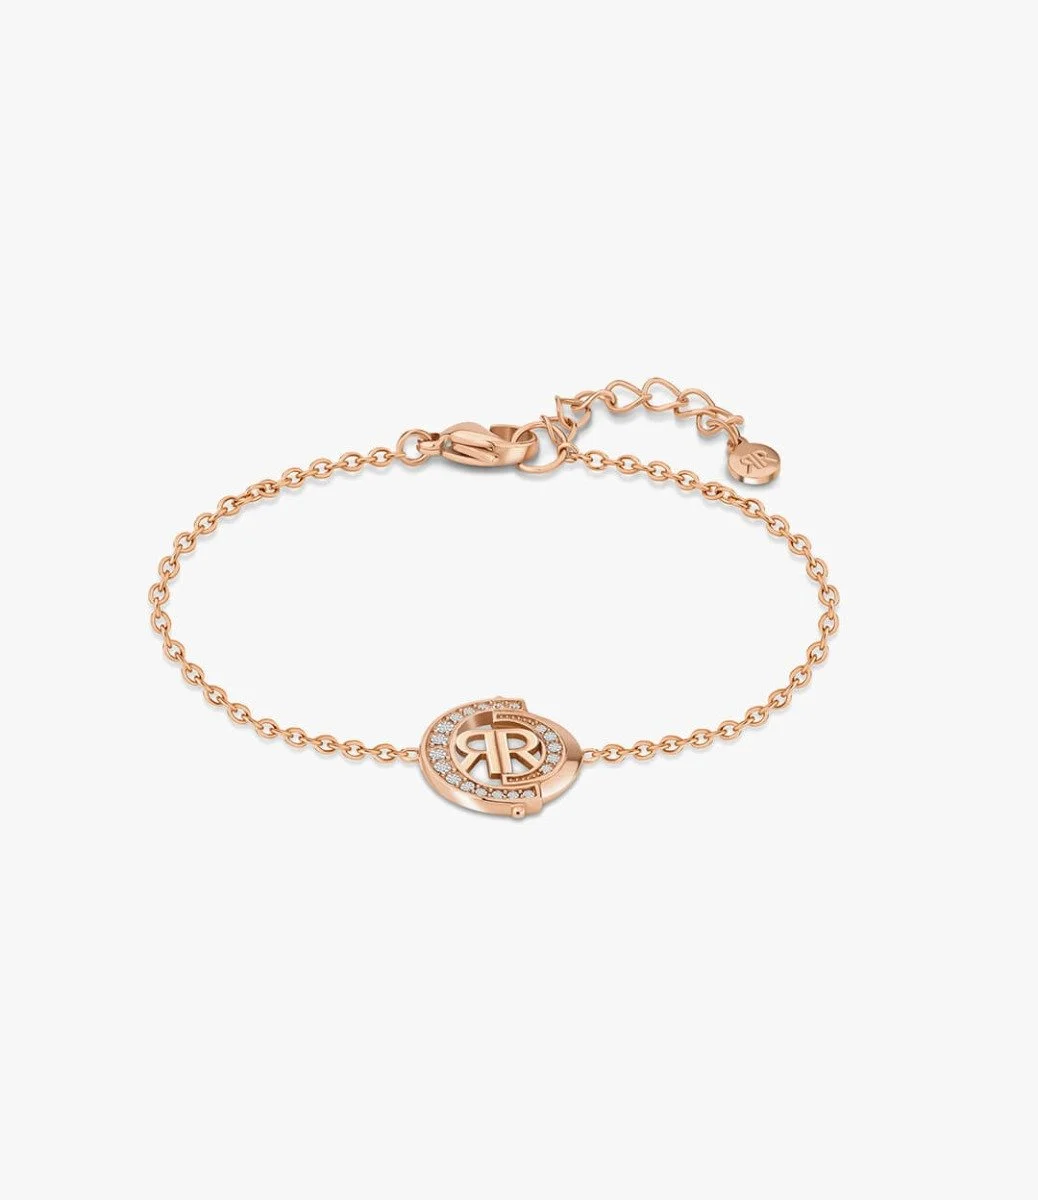 CERRUTI 1881 Stylish Rose Gold Bracelet